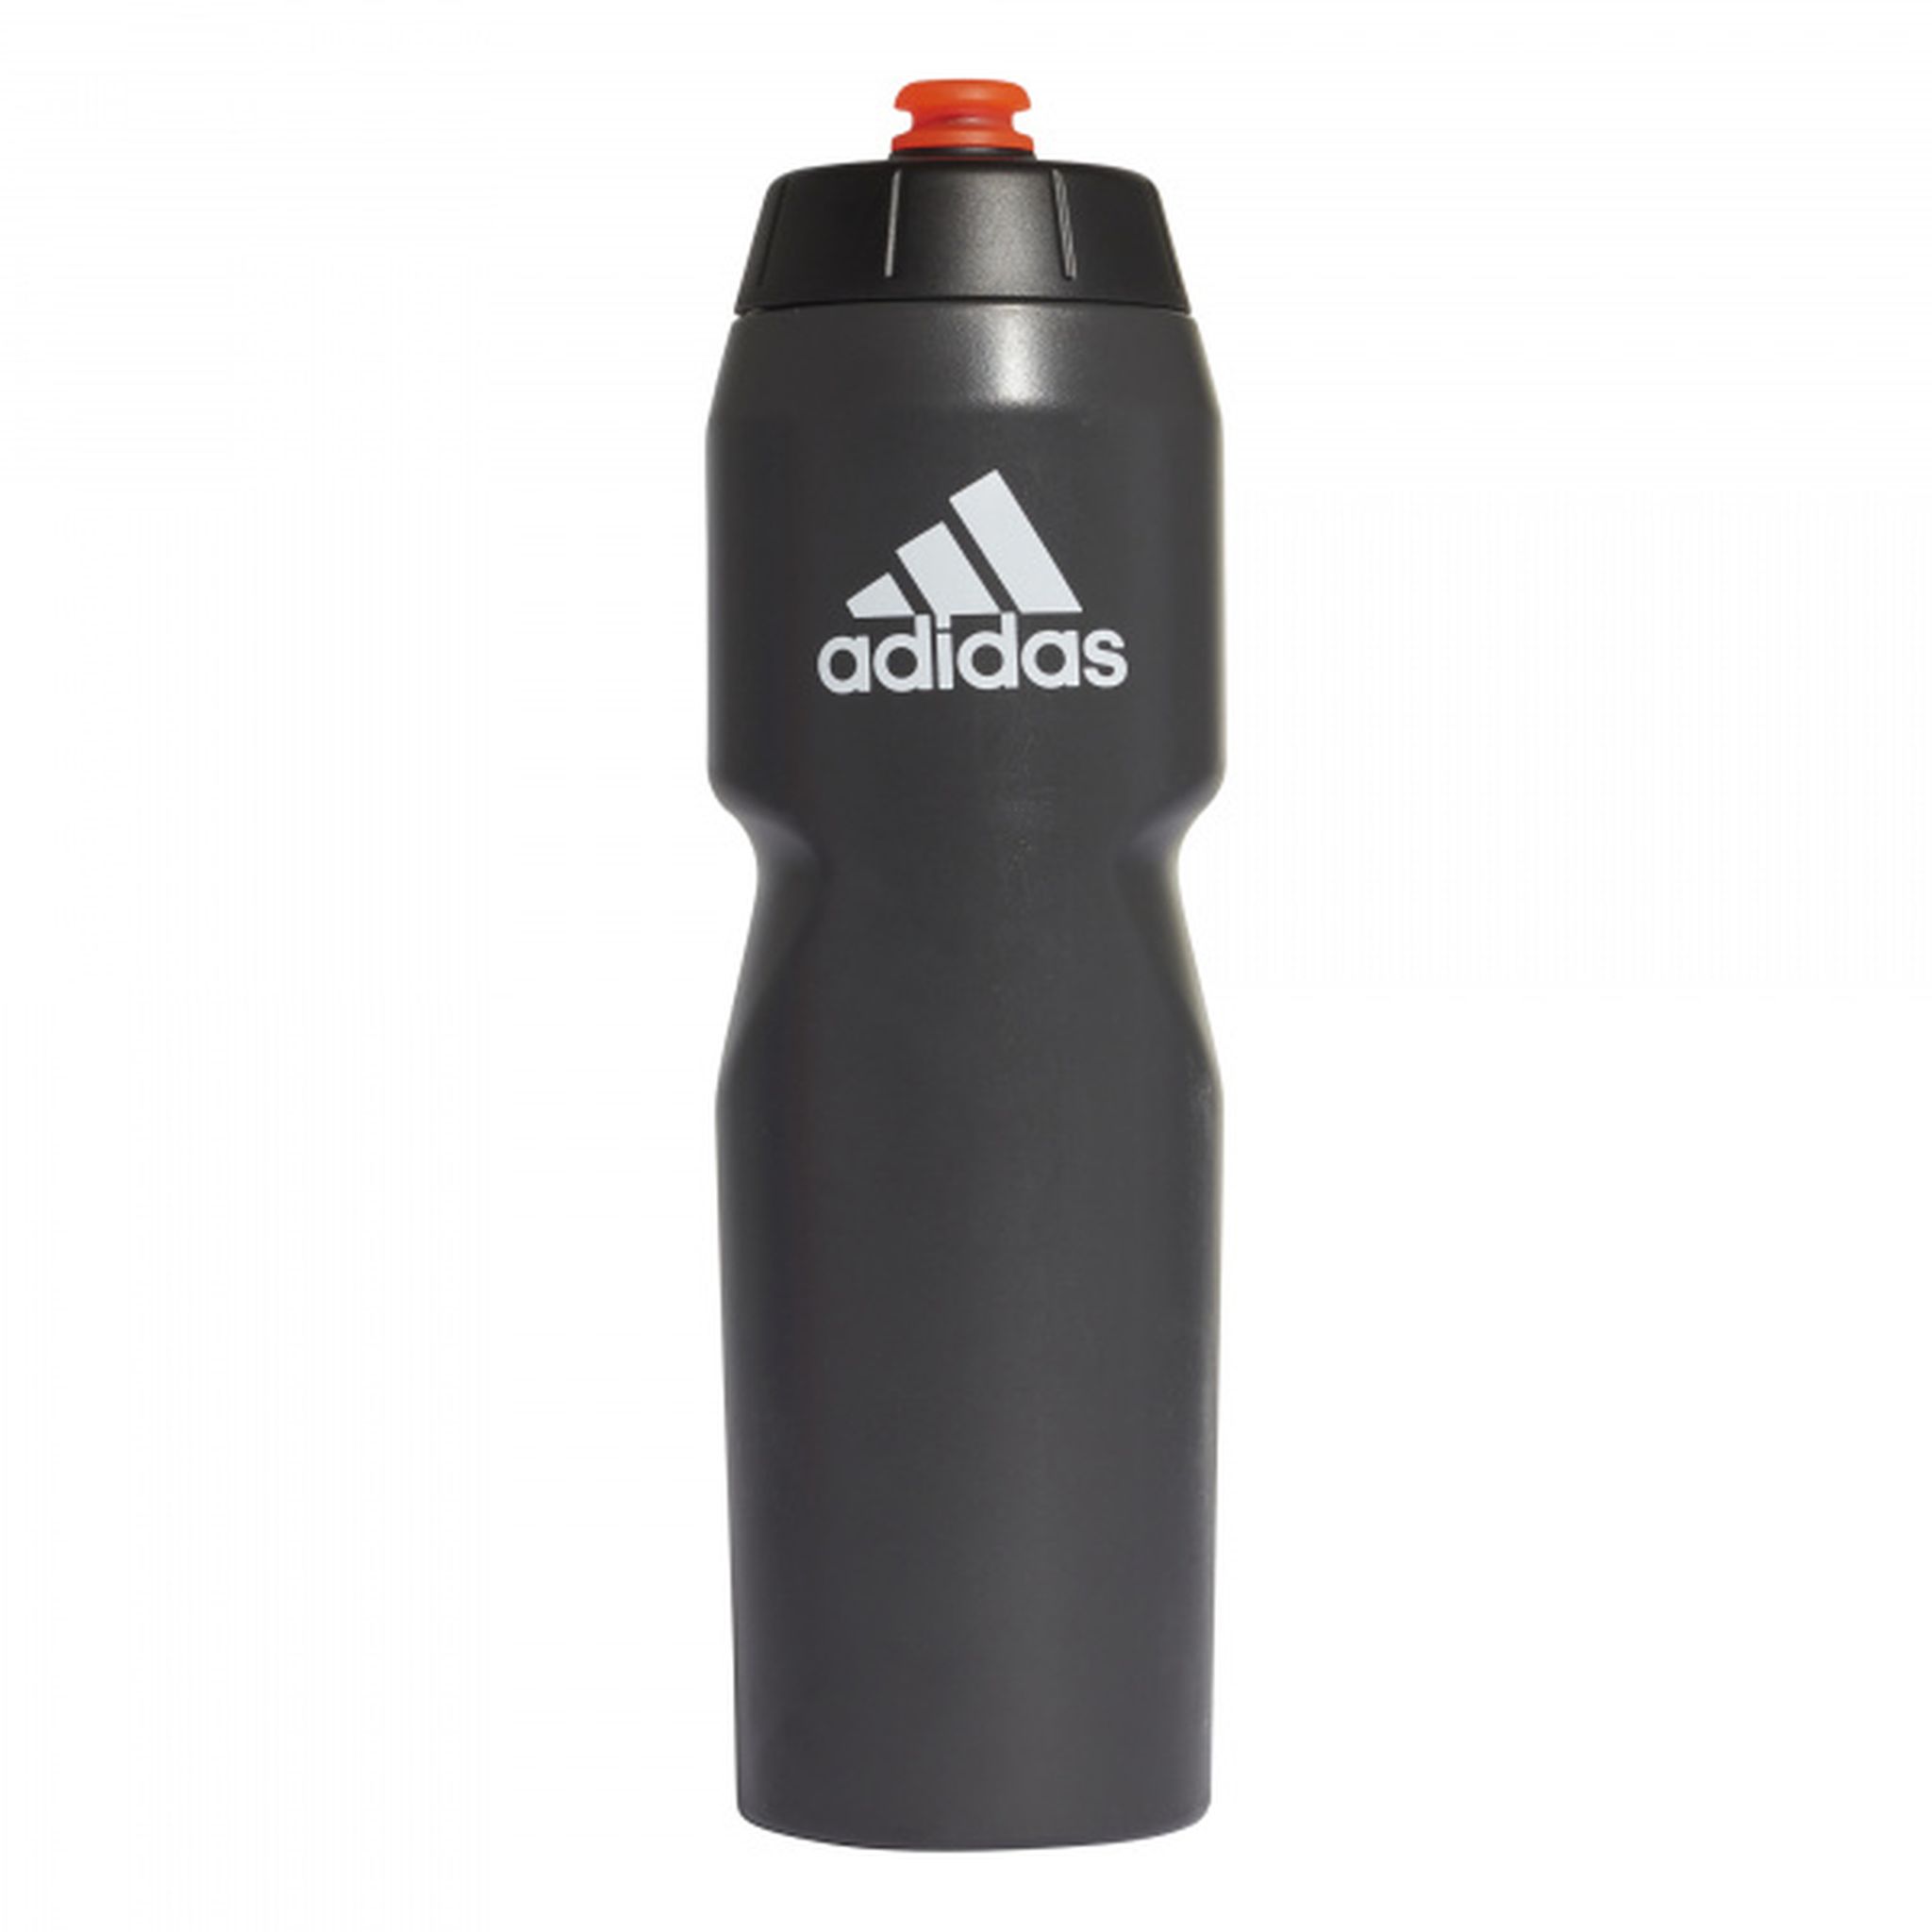 Adidas Performance Drink Bottle 750mls